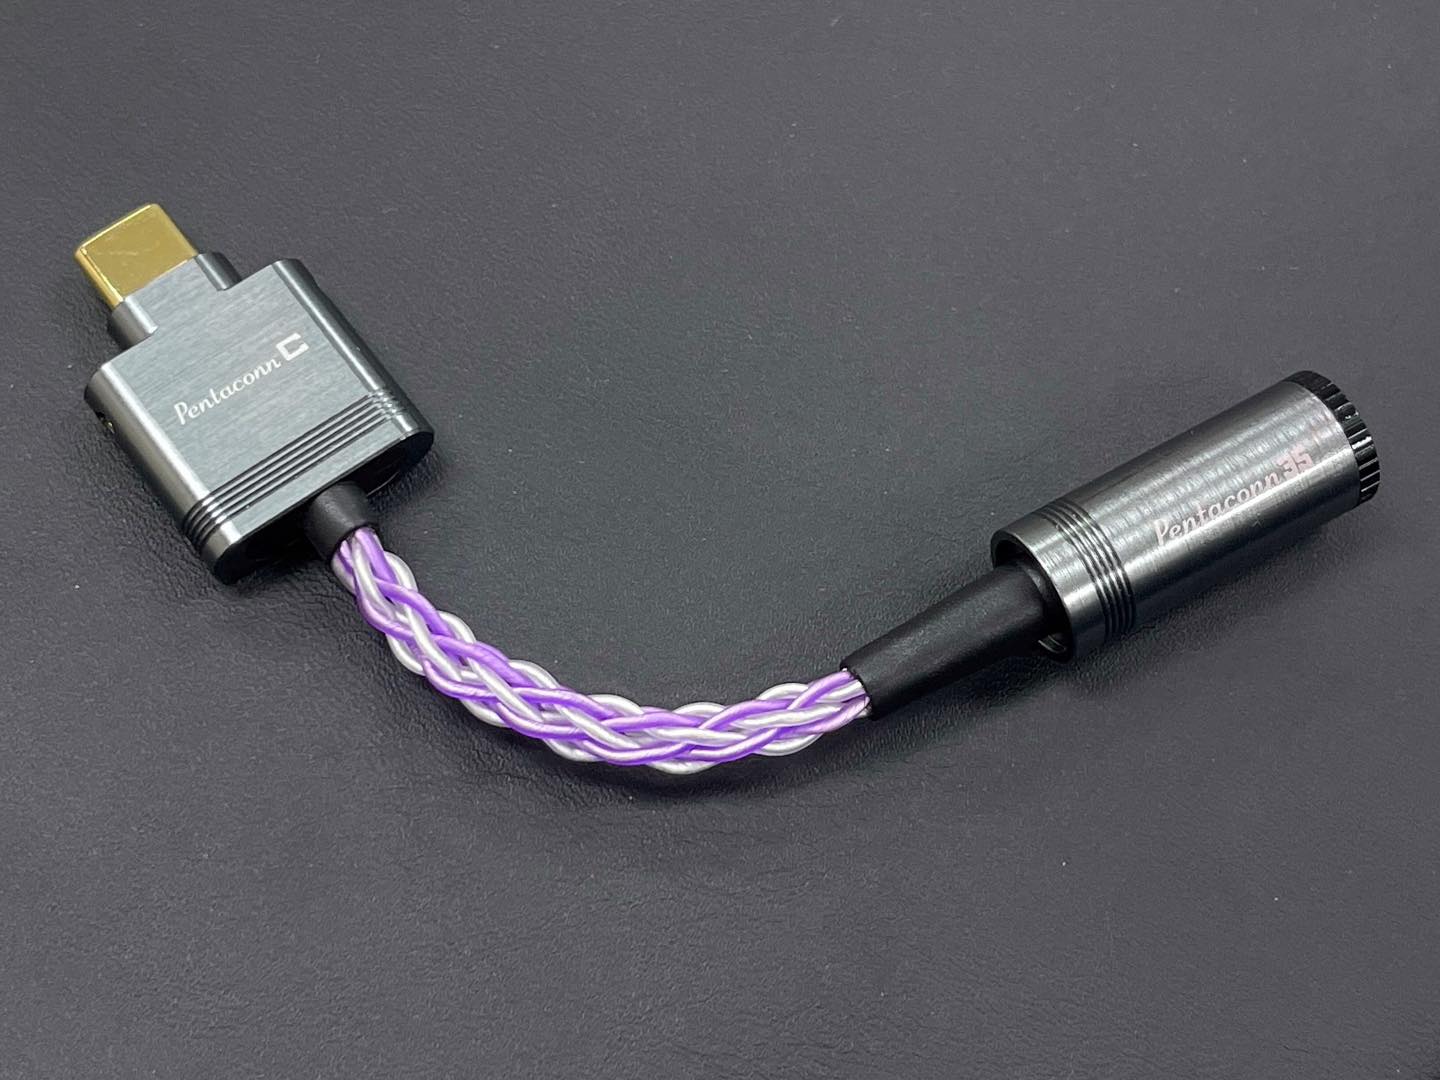 Pentaconn Wistaria｜紫藤『Pentaconn C』USB Type-C 轉接線